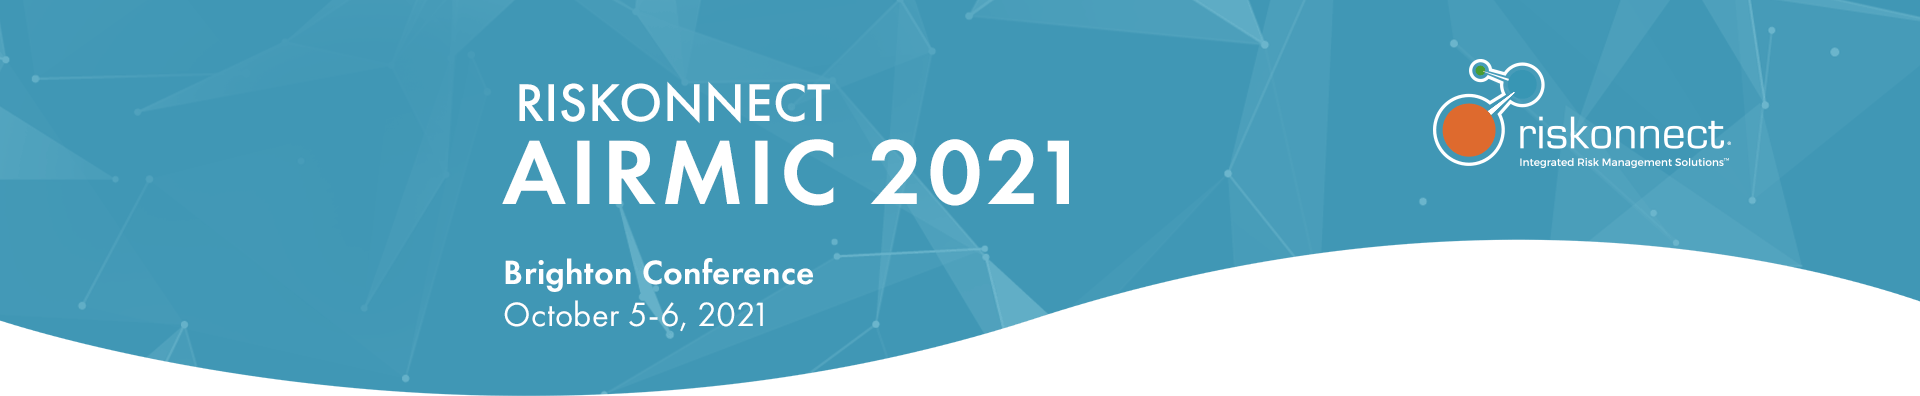 airmic 2021 riskonnect brighton